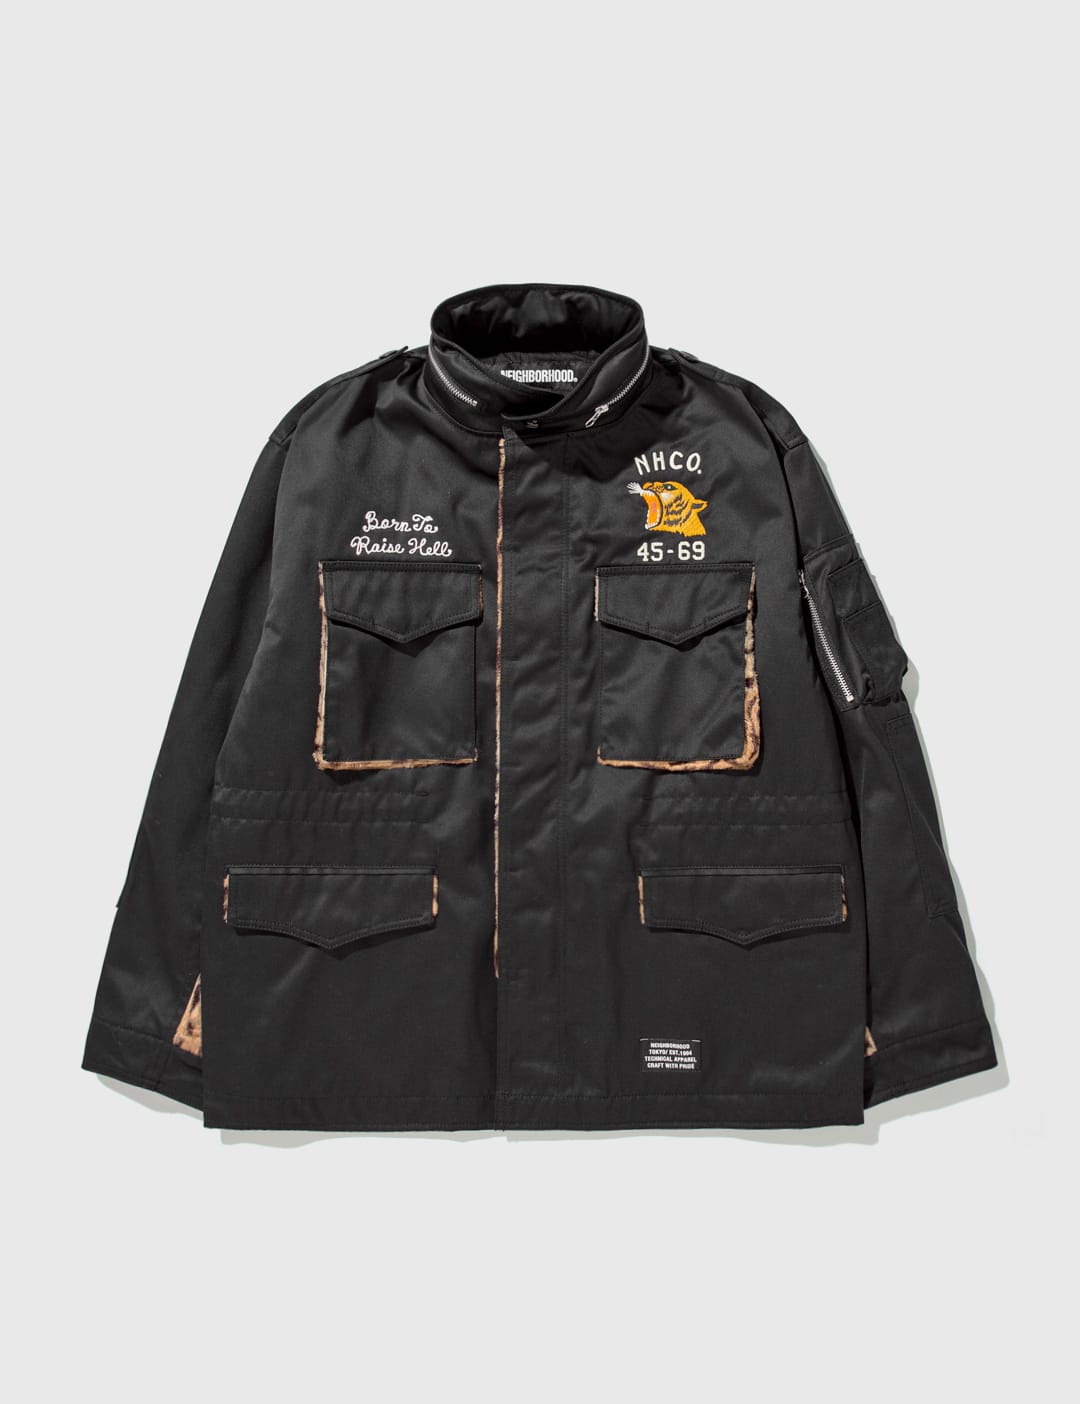 NEIGHBORHOOD - M-65 Jacket | HBX - Globally Curated Fashion